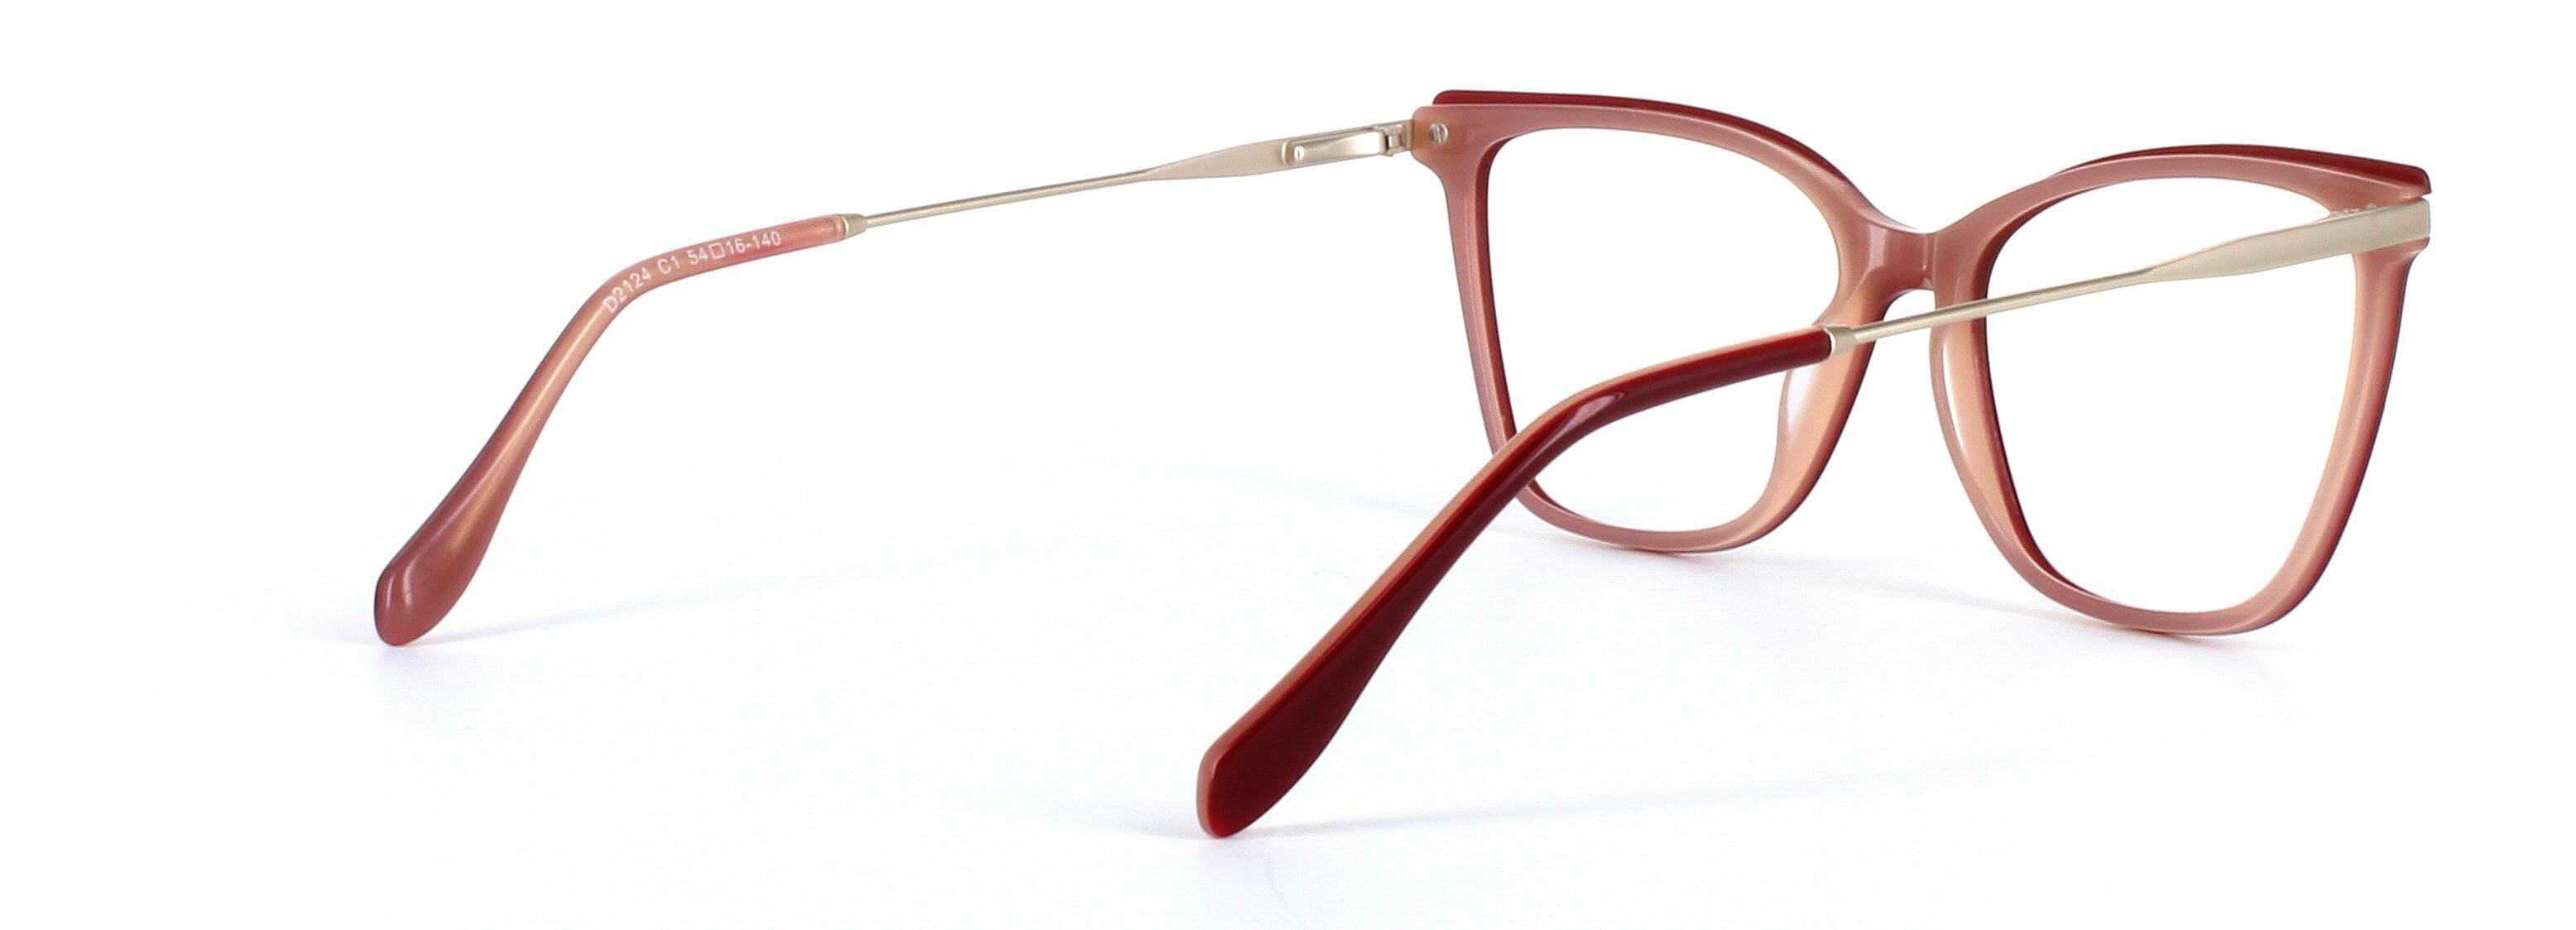 Harleigh Red Full Rim Square Acetate Glasses - Image View 4